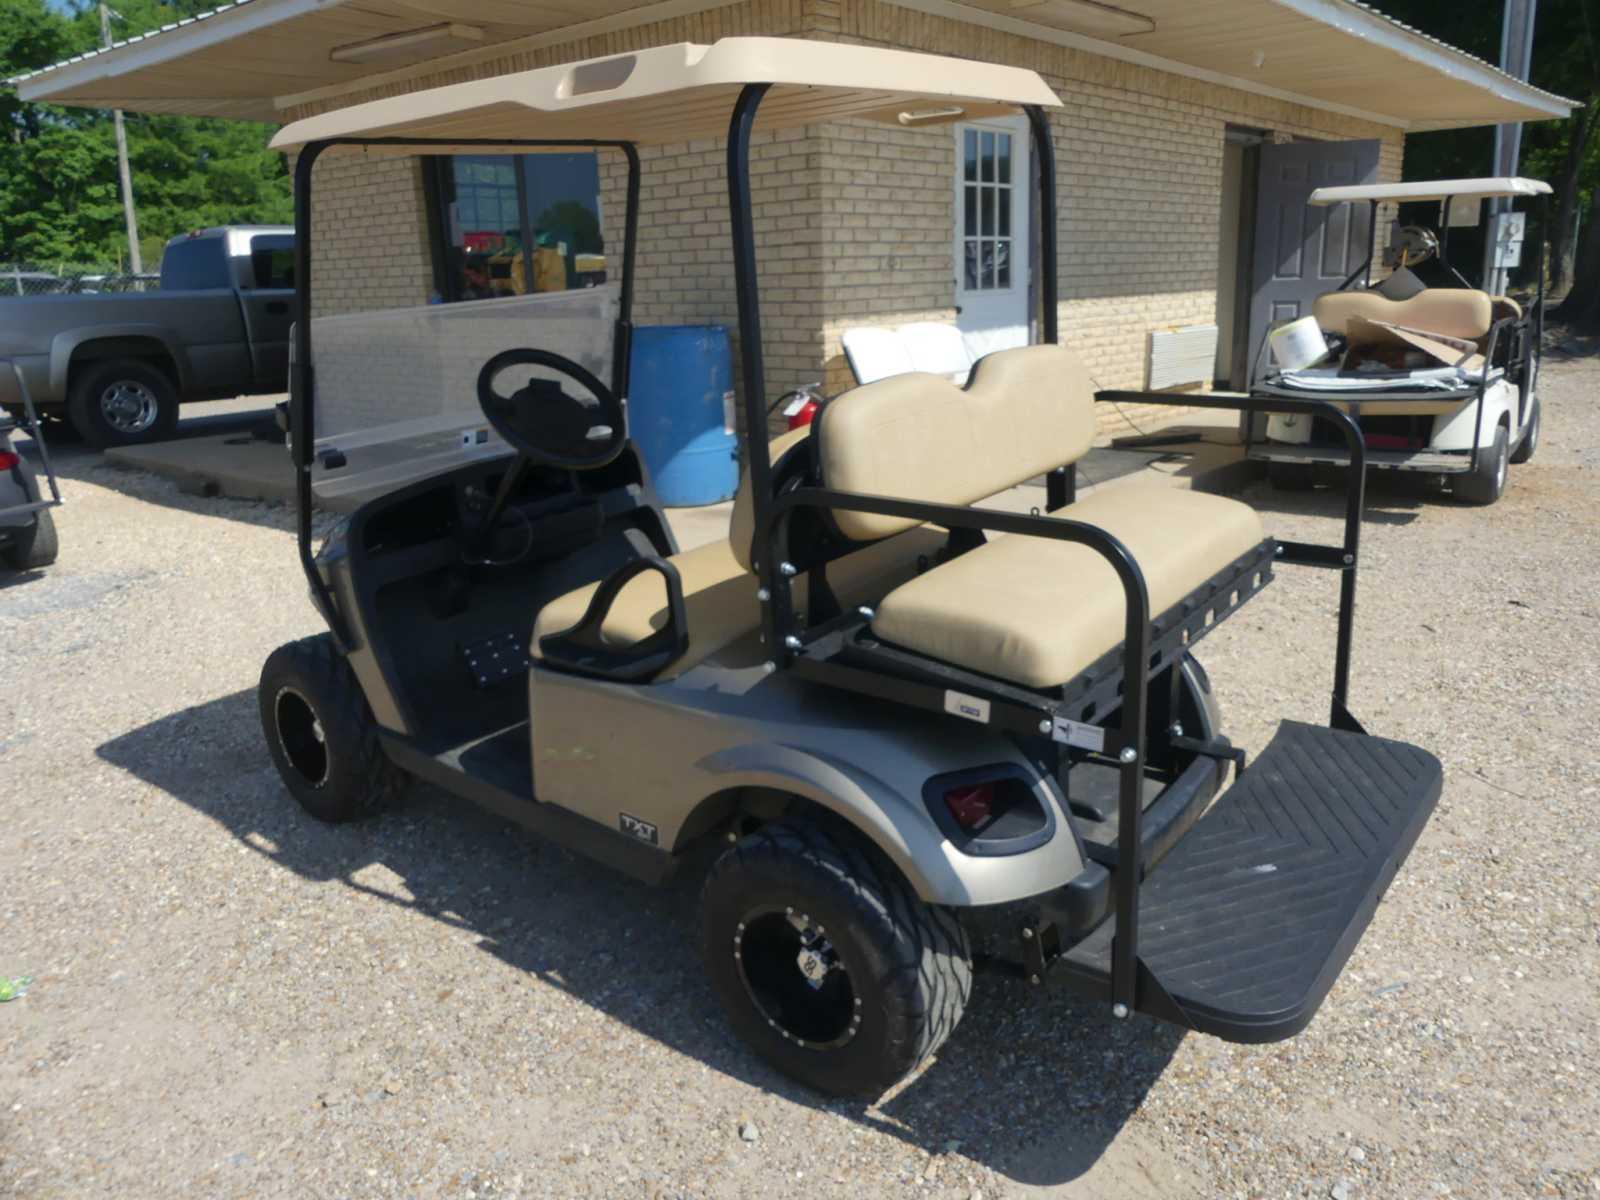 2019 EZGo TXT Gas Golf Cart, s/n 3432171 (No Title): EFI, Lift Kit, Back Se